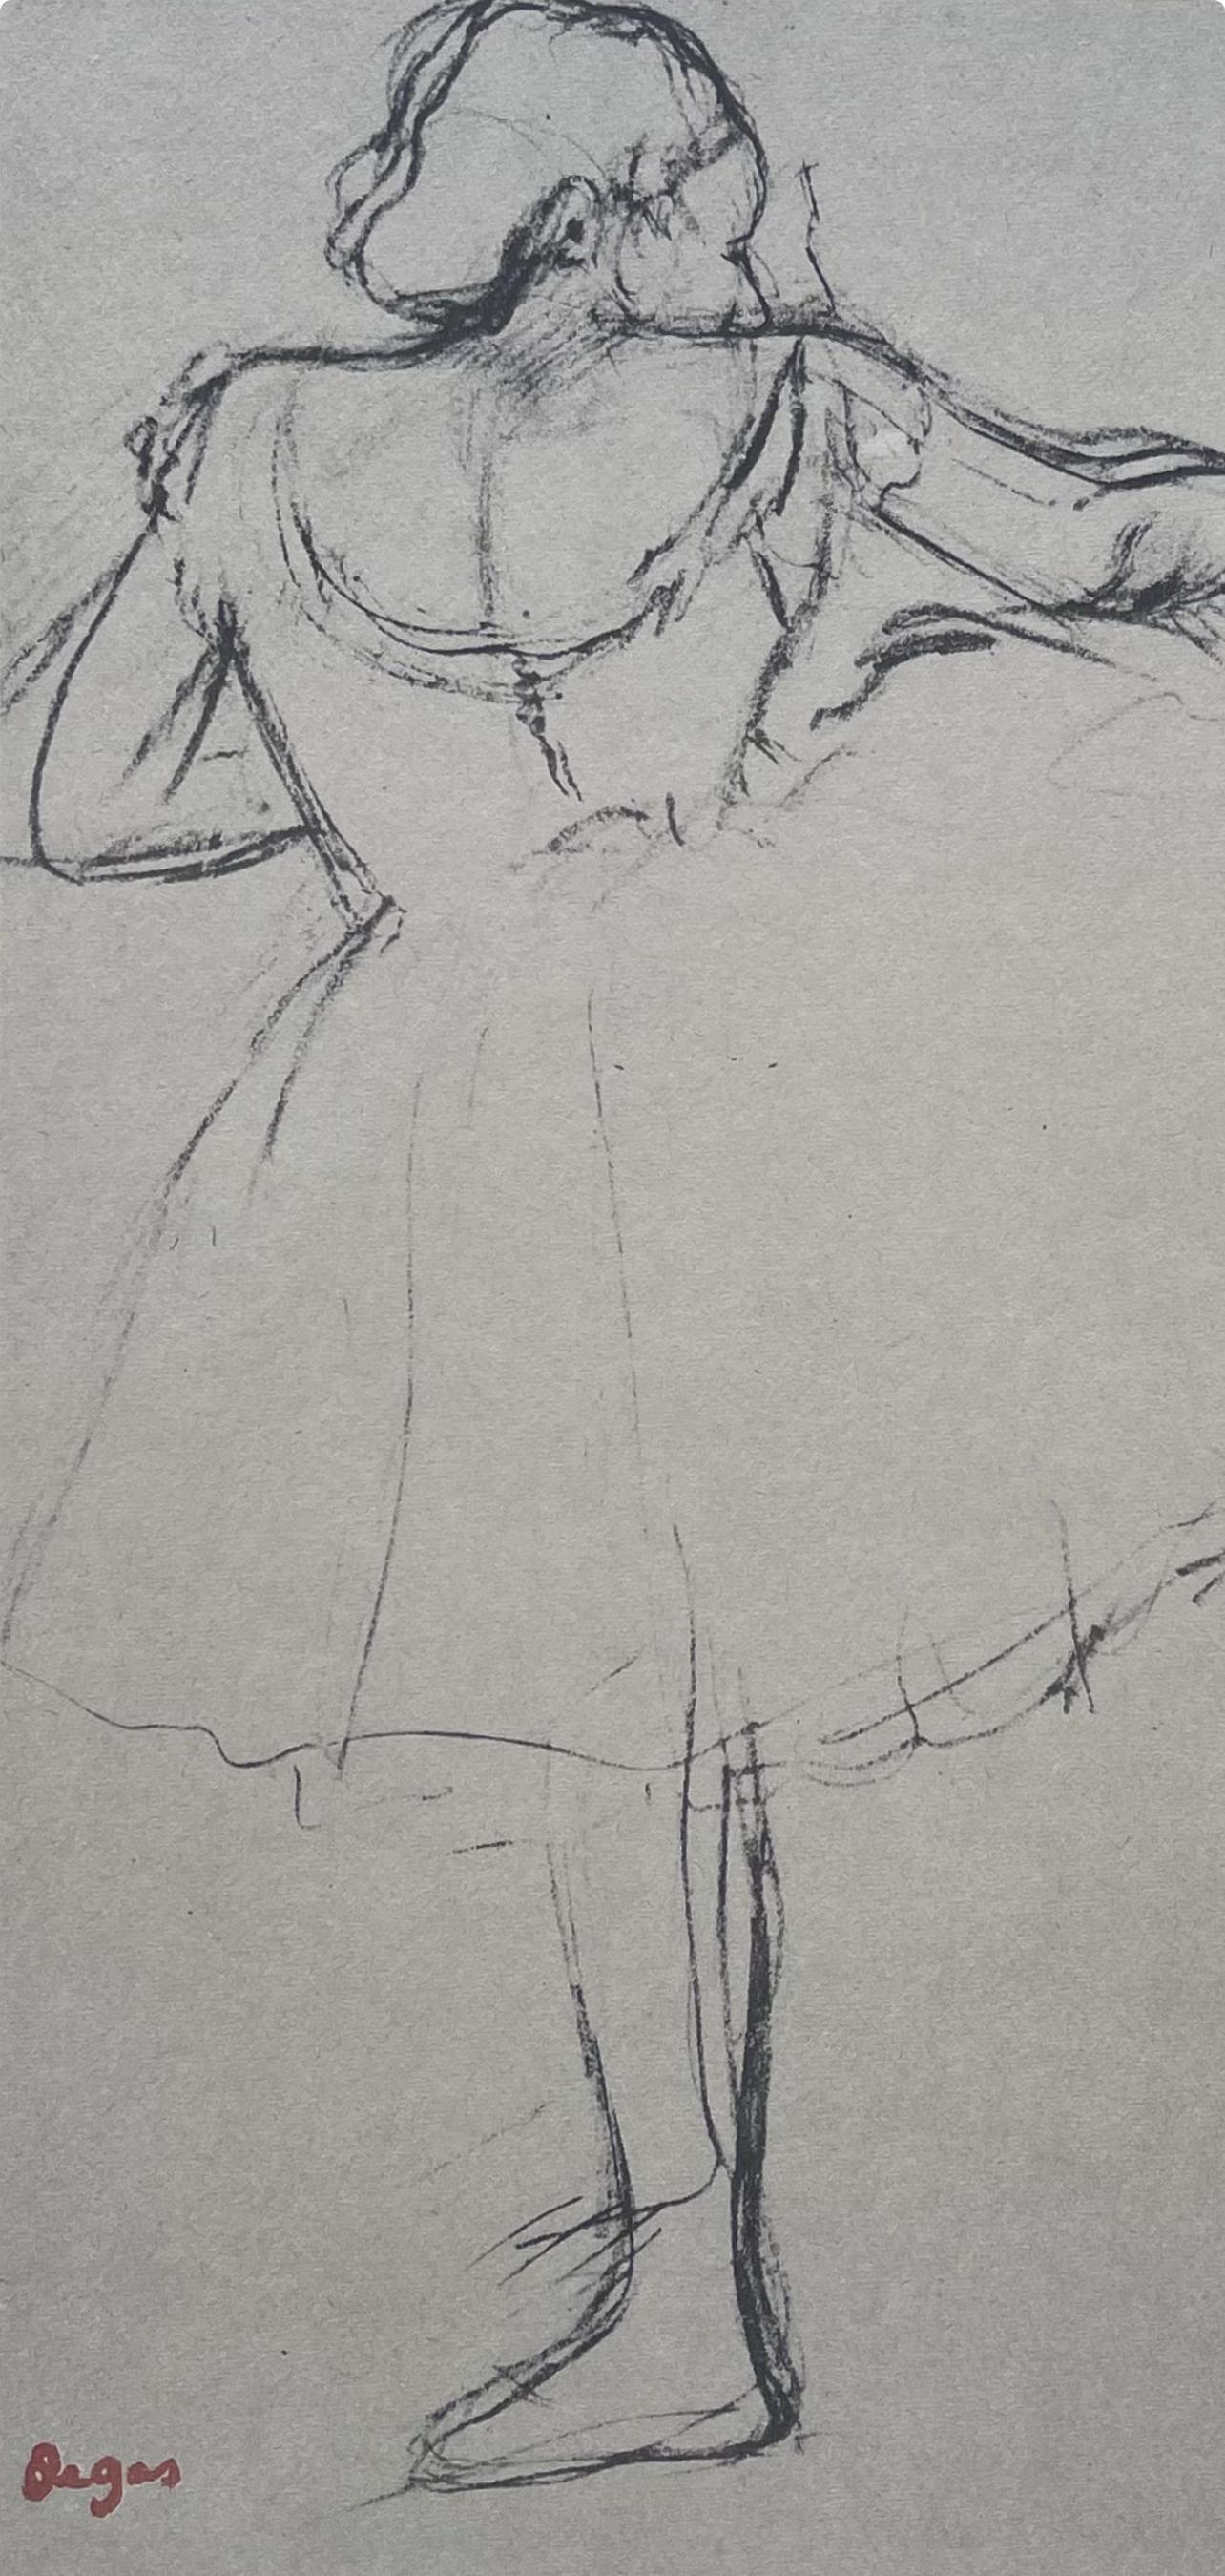 Degas, Dancer at the bar, Ten Ballet Sketches (after) - Print by Edgar Degas